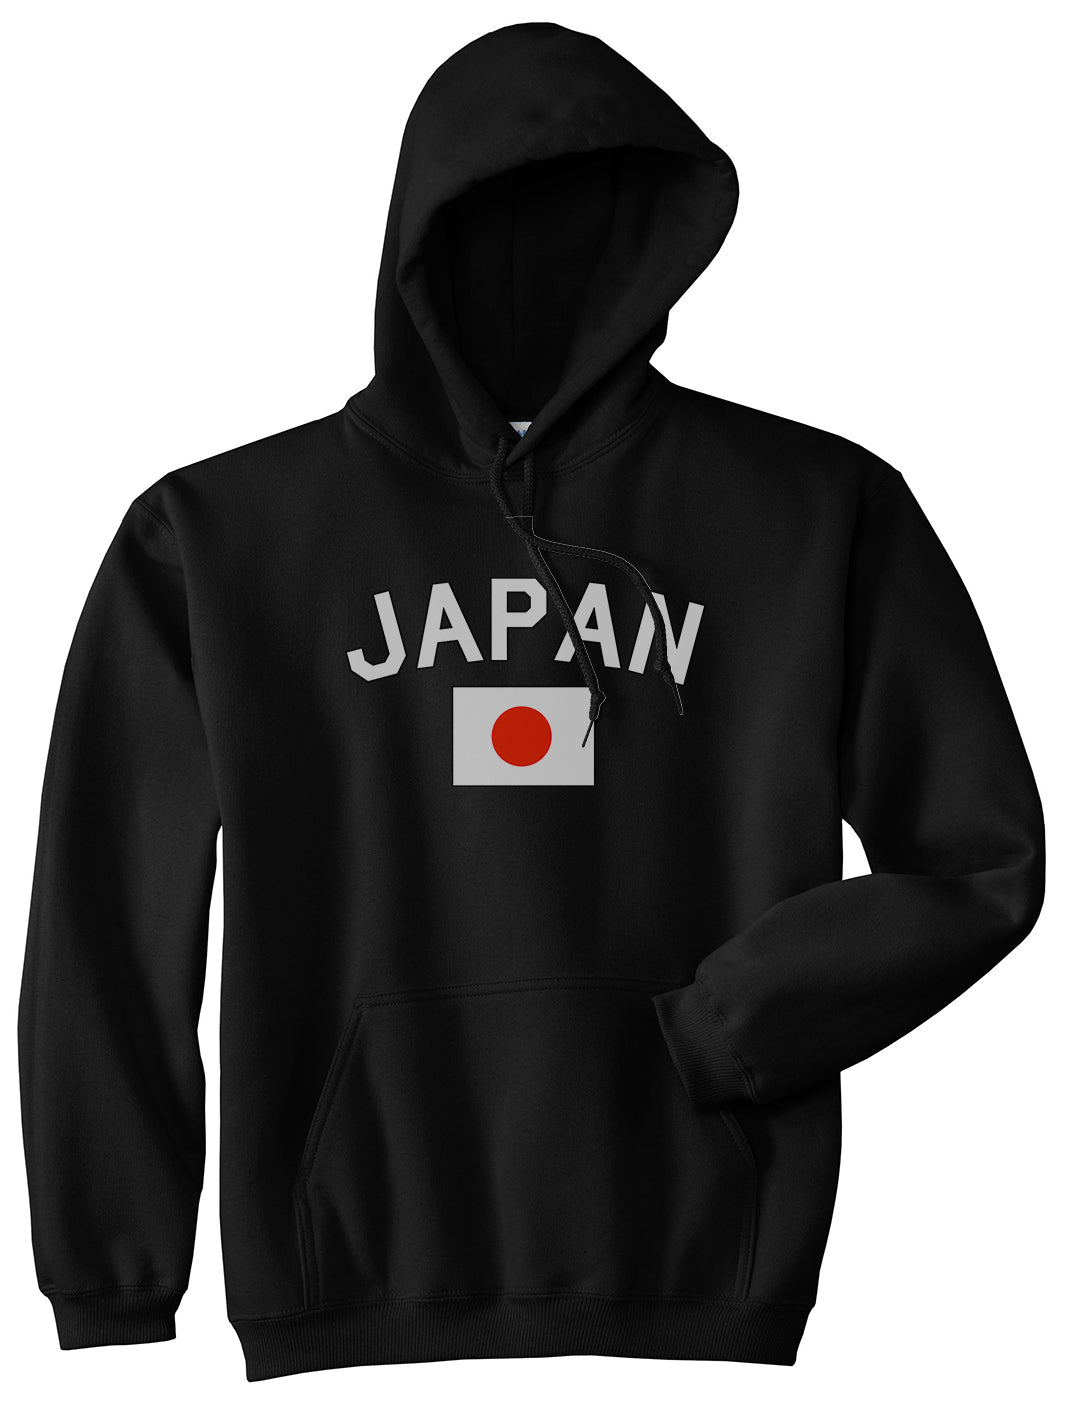 Japan With Japanese Flag Mens Pullover Hoodie Black